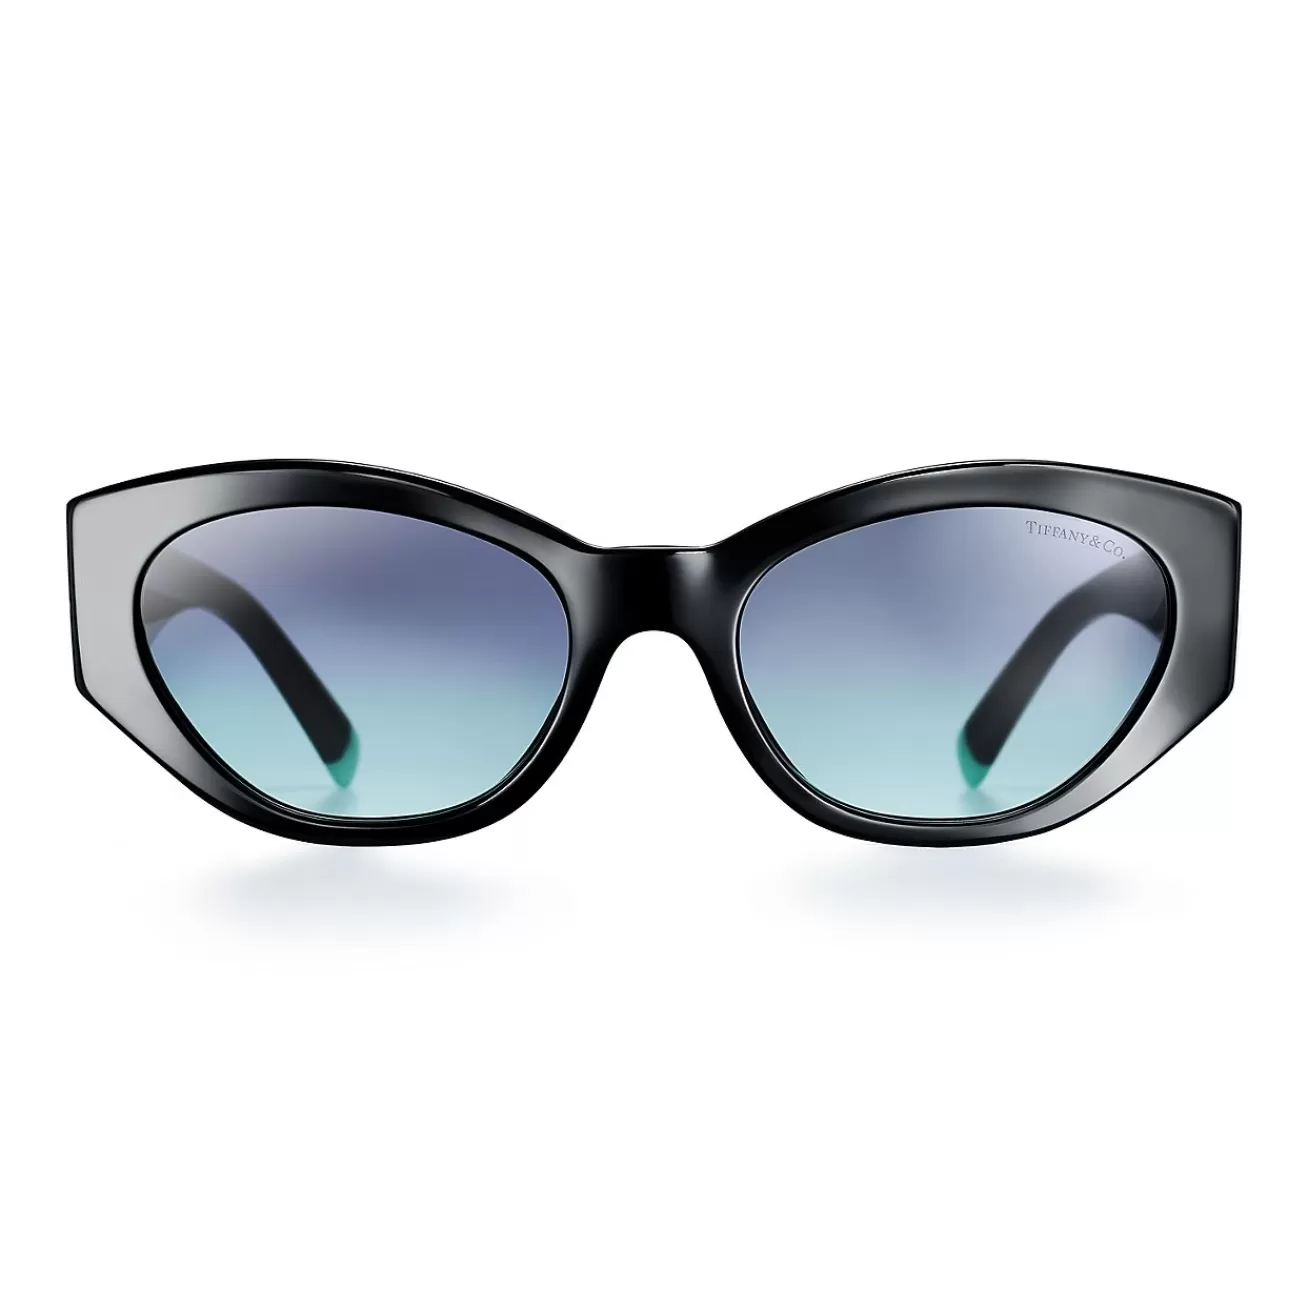 Tiffany & Co. Tiffany Blue® oval sunglasses in black acetate. | ^ Sunglasses